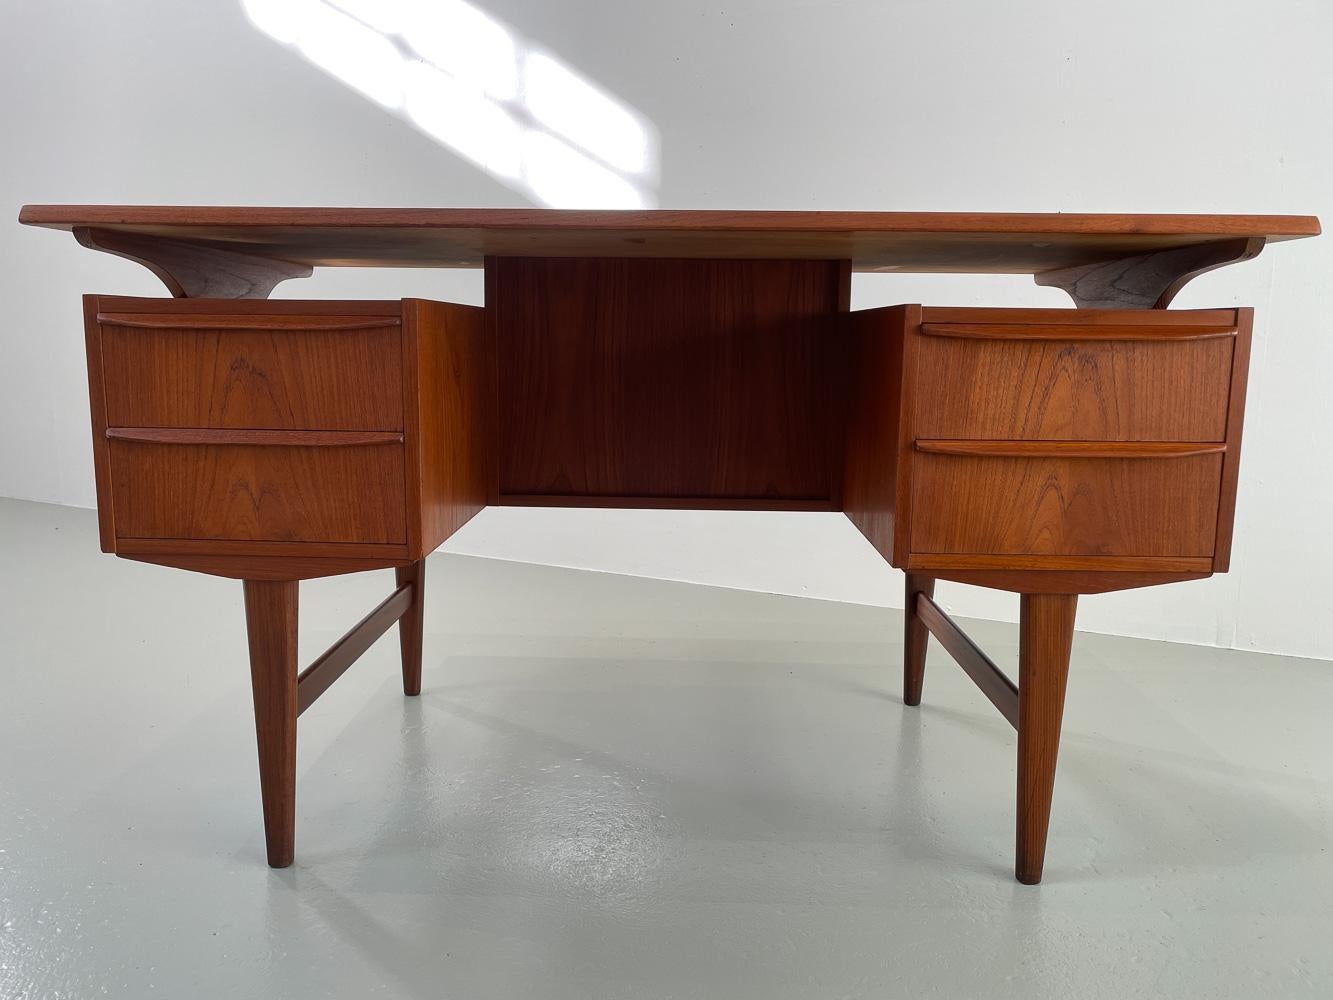 Mid-20th Century Vintage Danish Freestanding Teak Desk with Floating Top, 1960s.